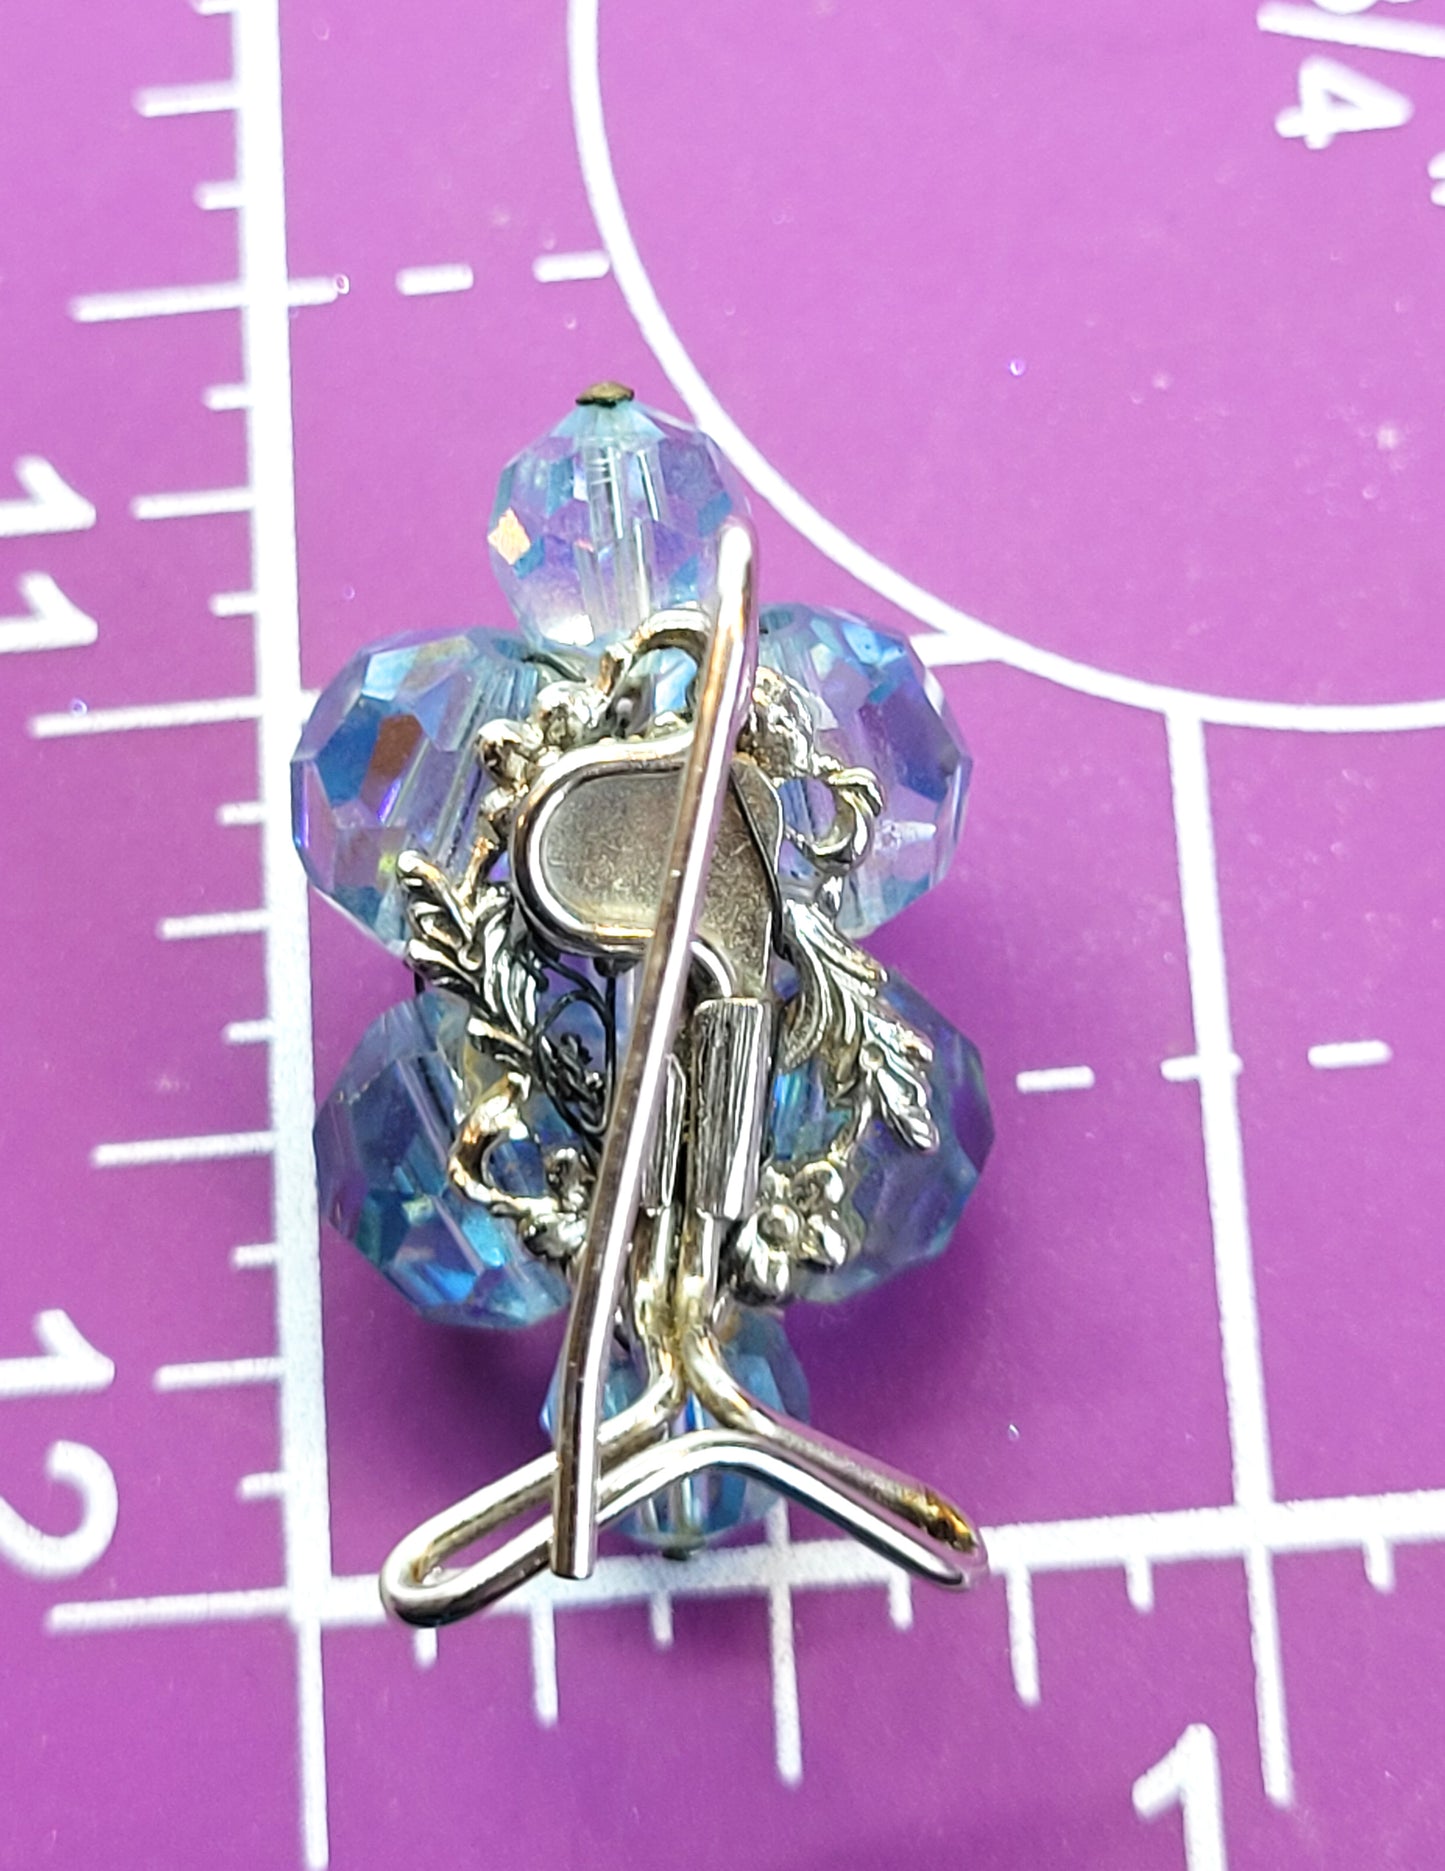 Judith McCann Austrian crystal blue aurora borealis wingback vintage earrings 2414382